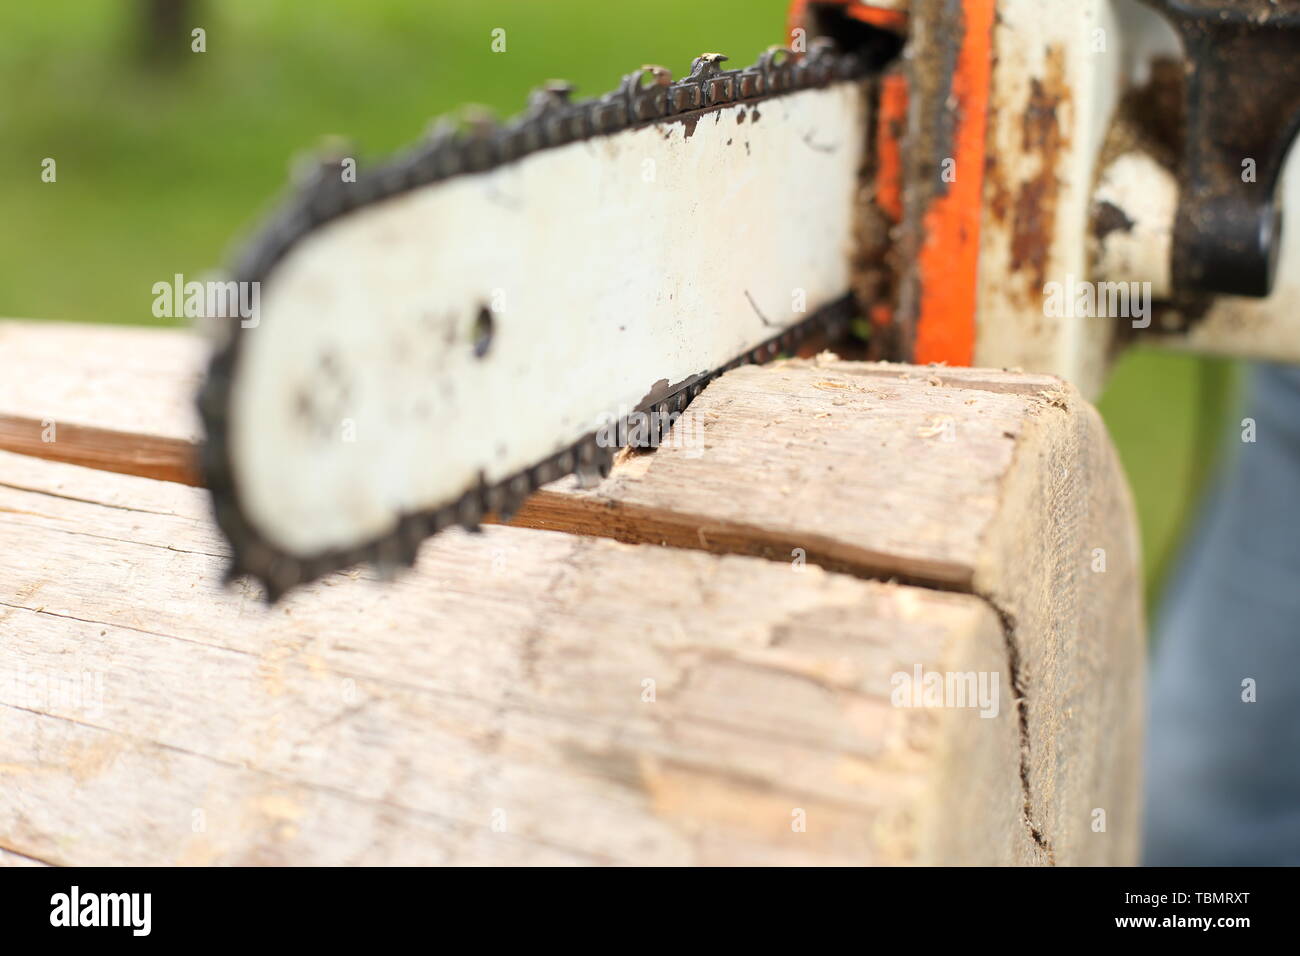 Un Close-up di una lama per sega da una sega a nastro Foto Stock